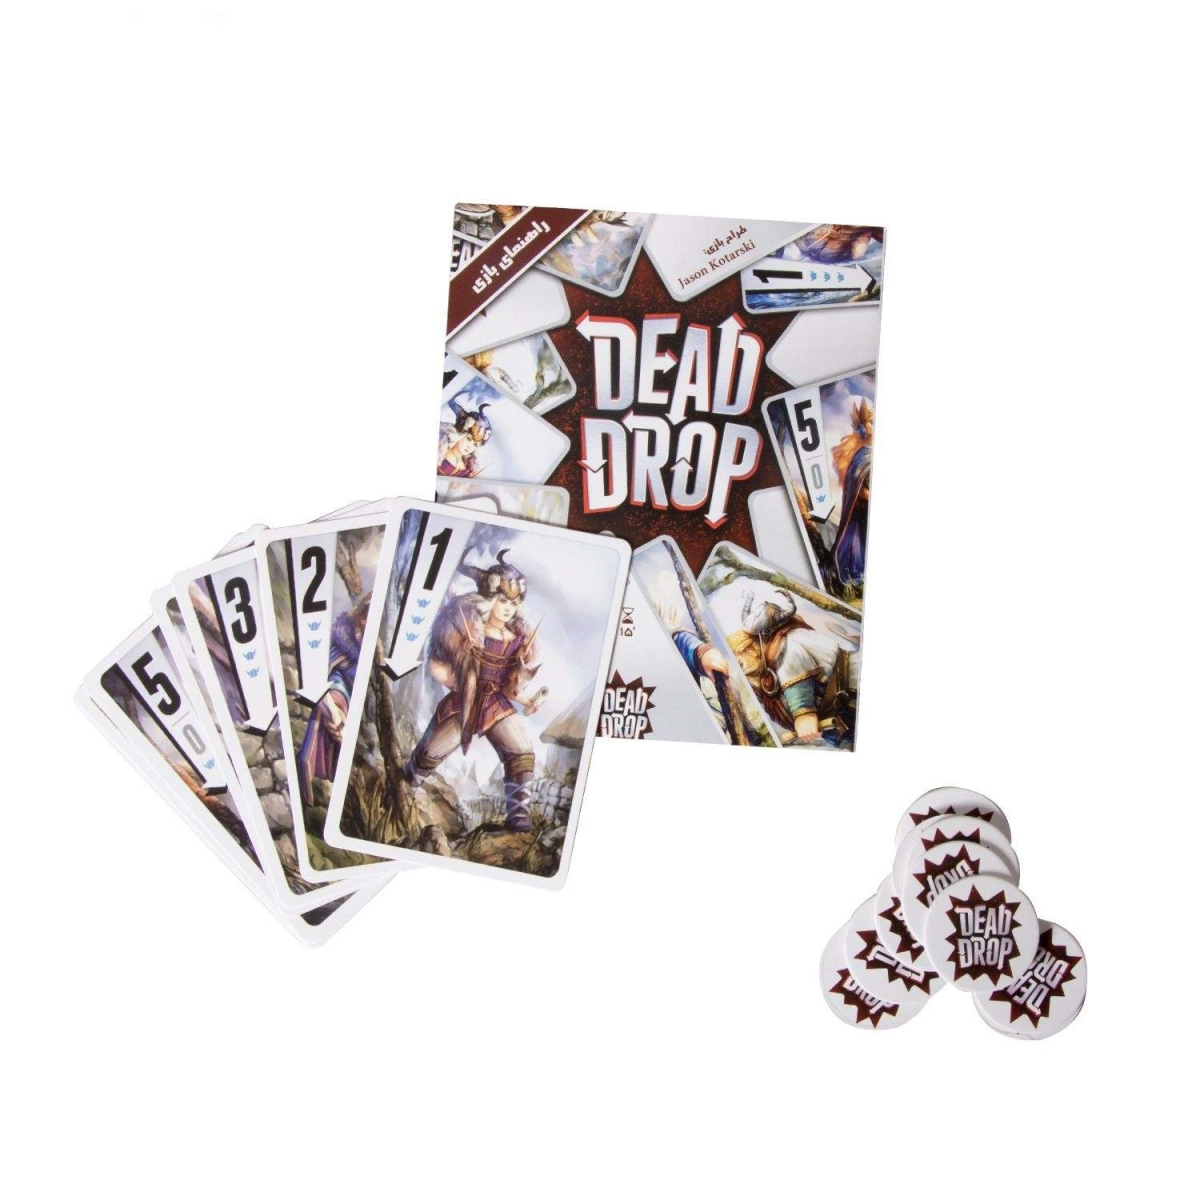 بازی فکری دد دراپ | Dead Drop